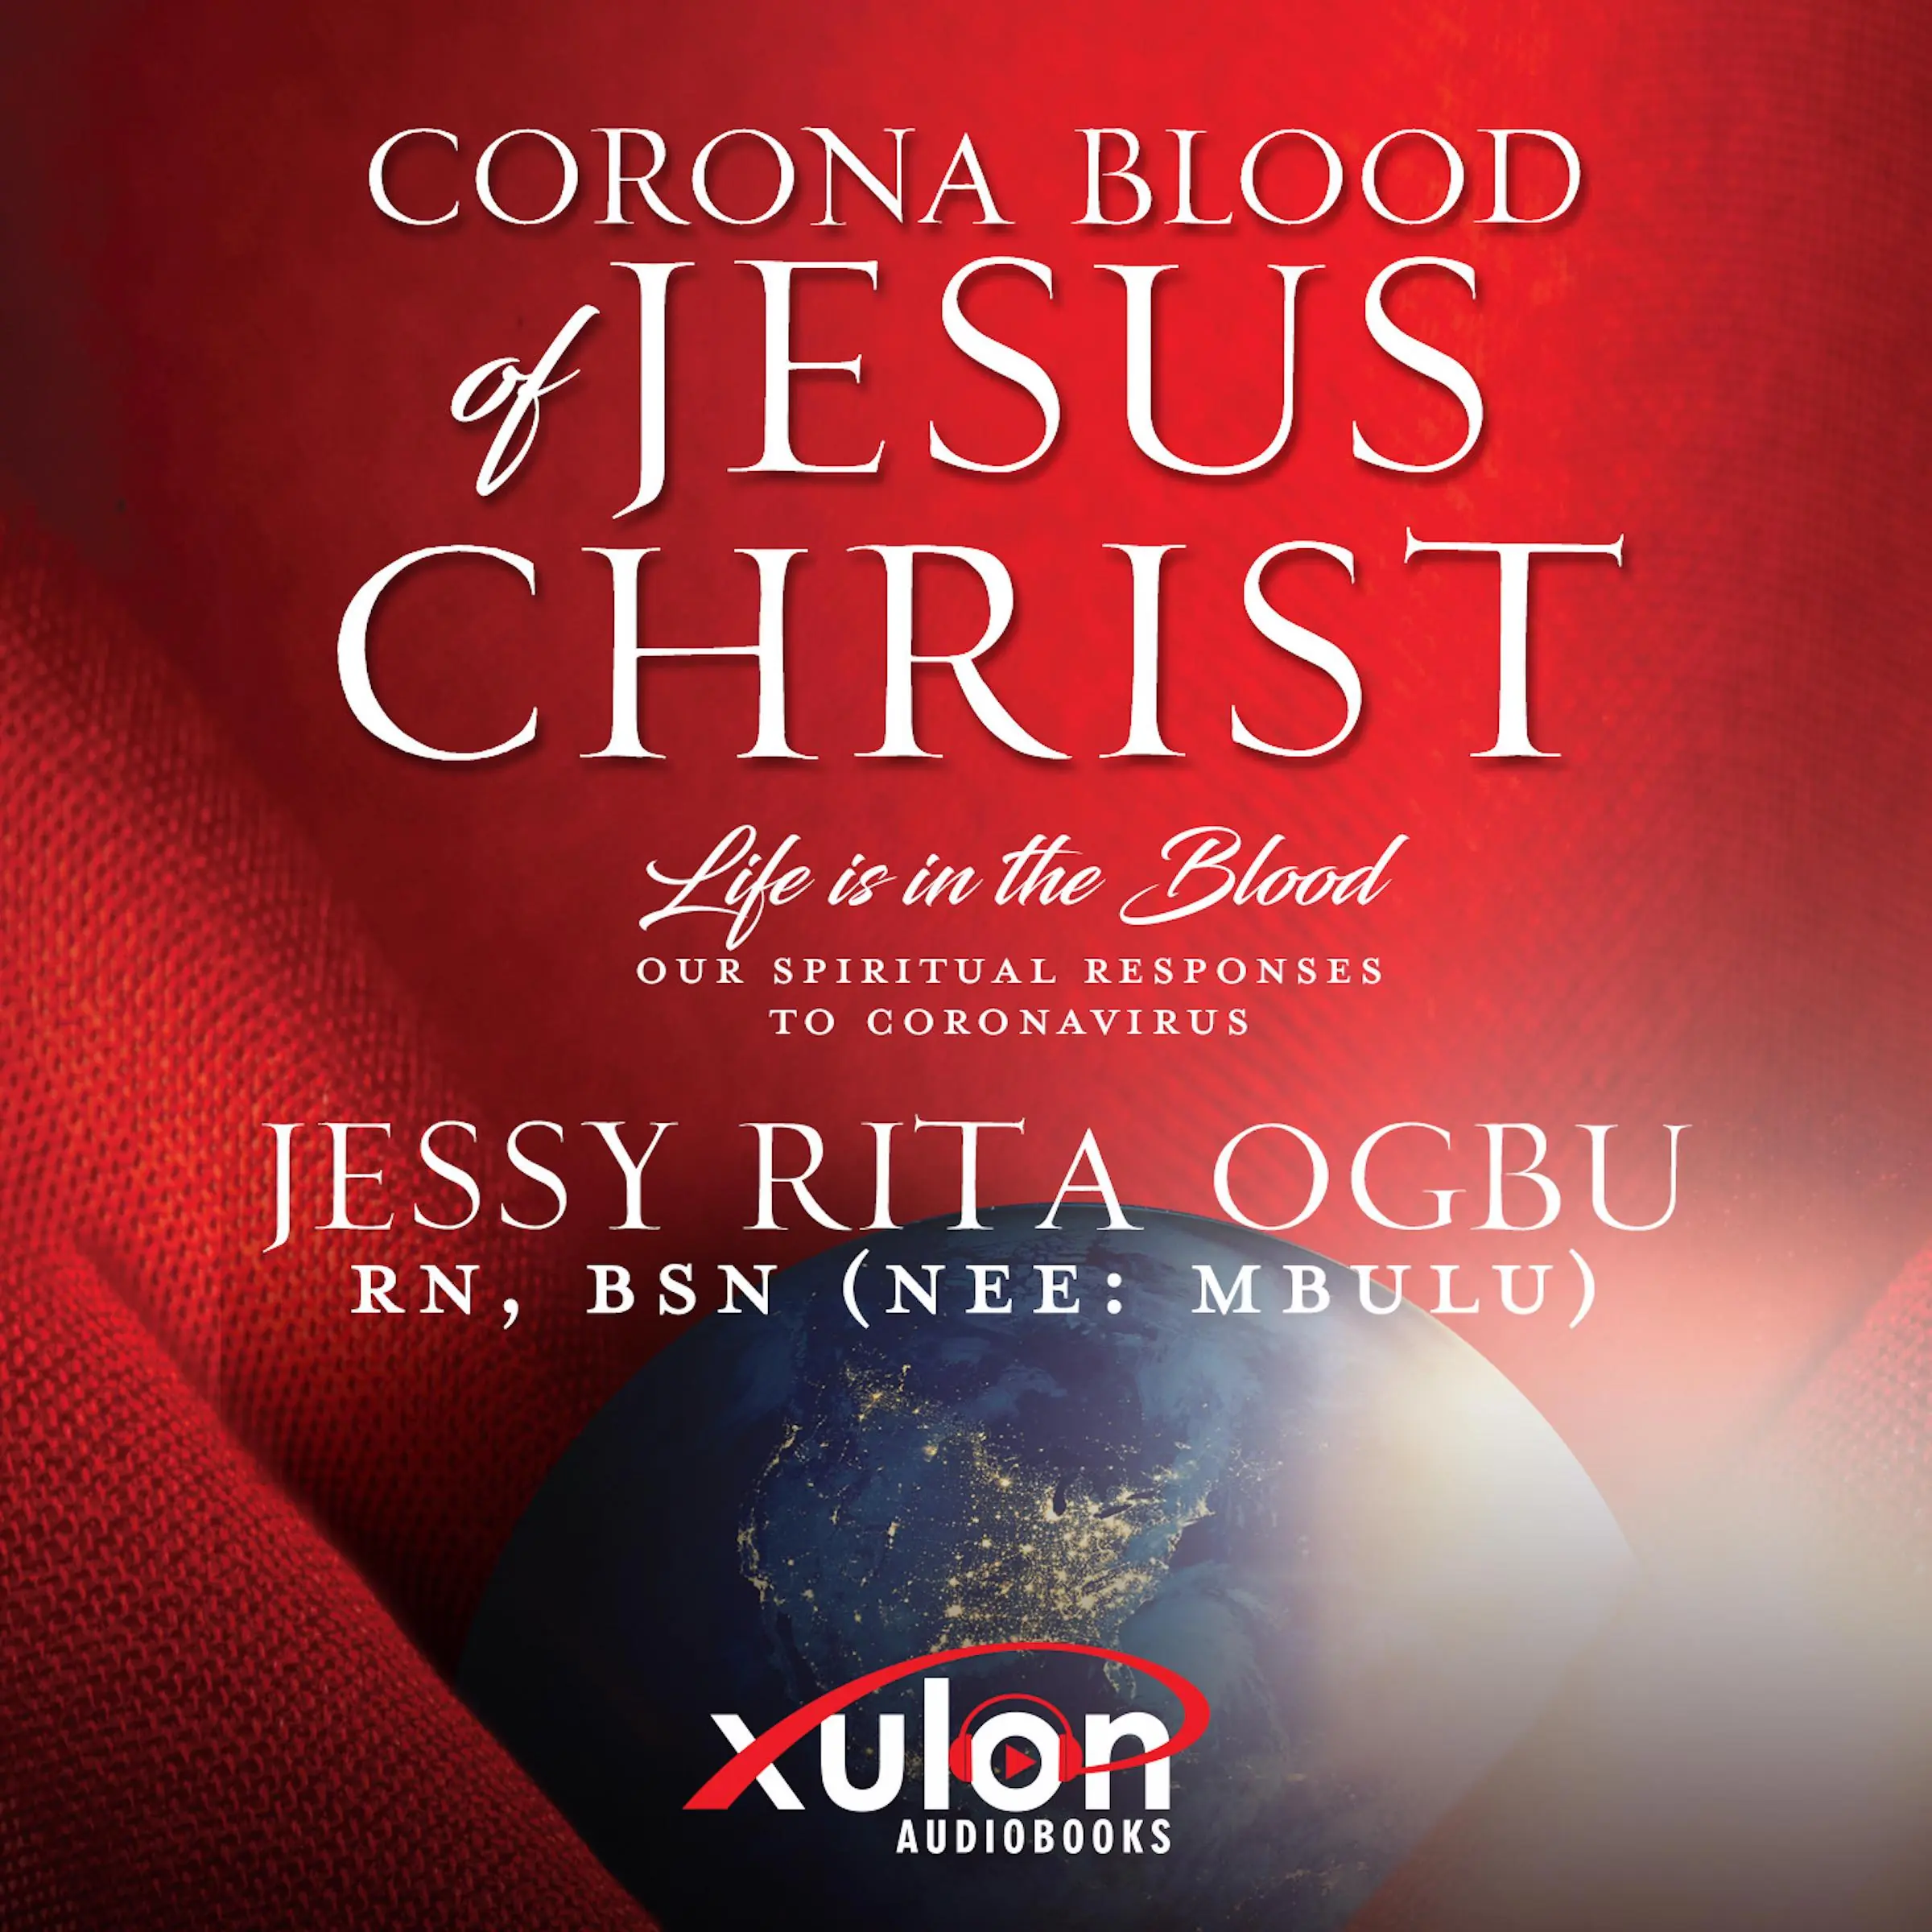 Corona Blood Of Jesus Christ by Jessy Rita Ogbu Audiobook